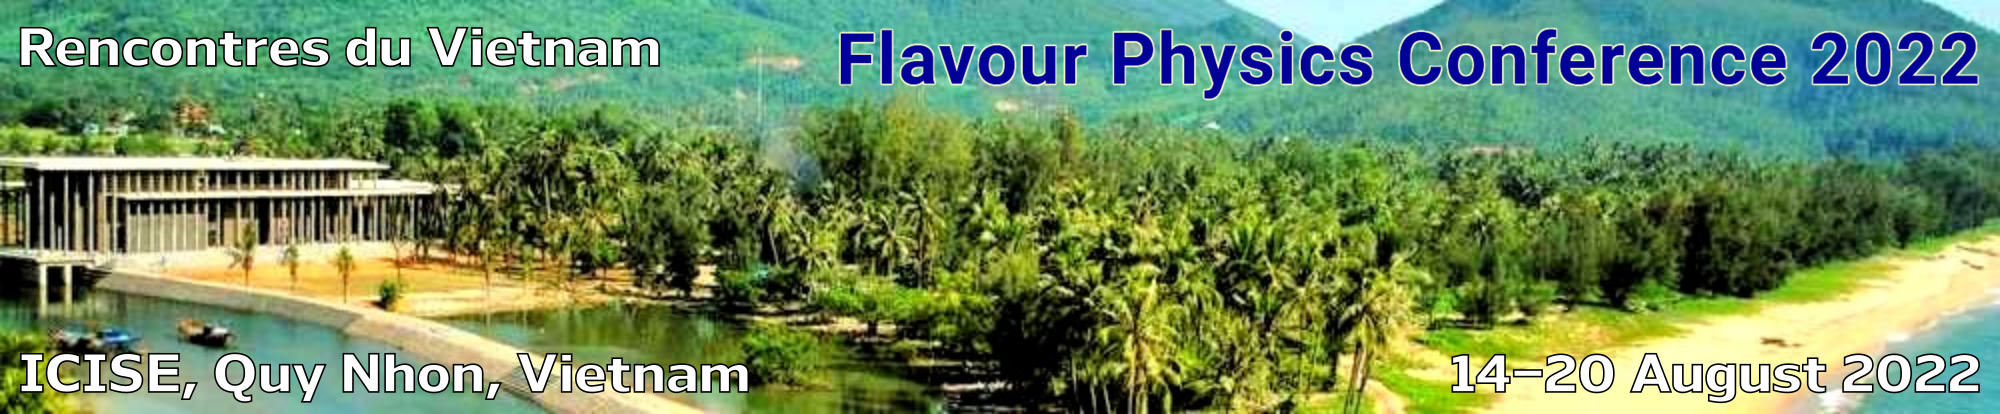 Vietnam Flavour Physics Conference 2022